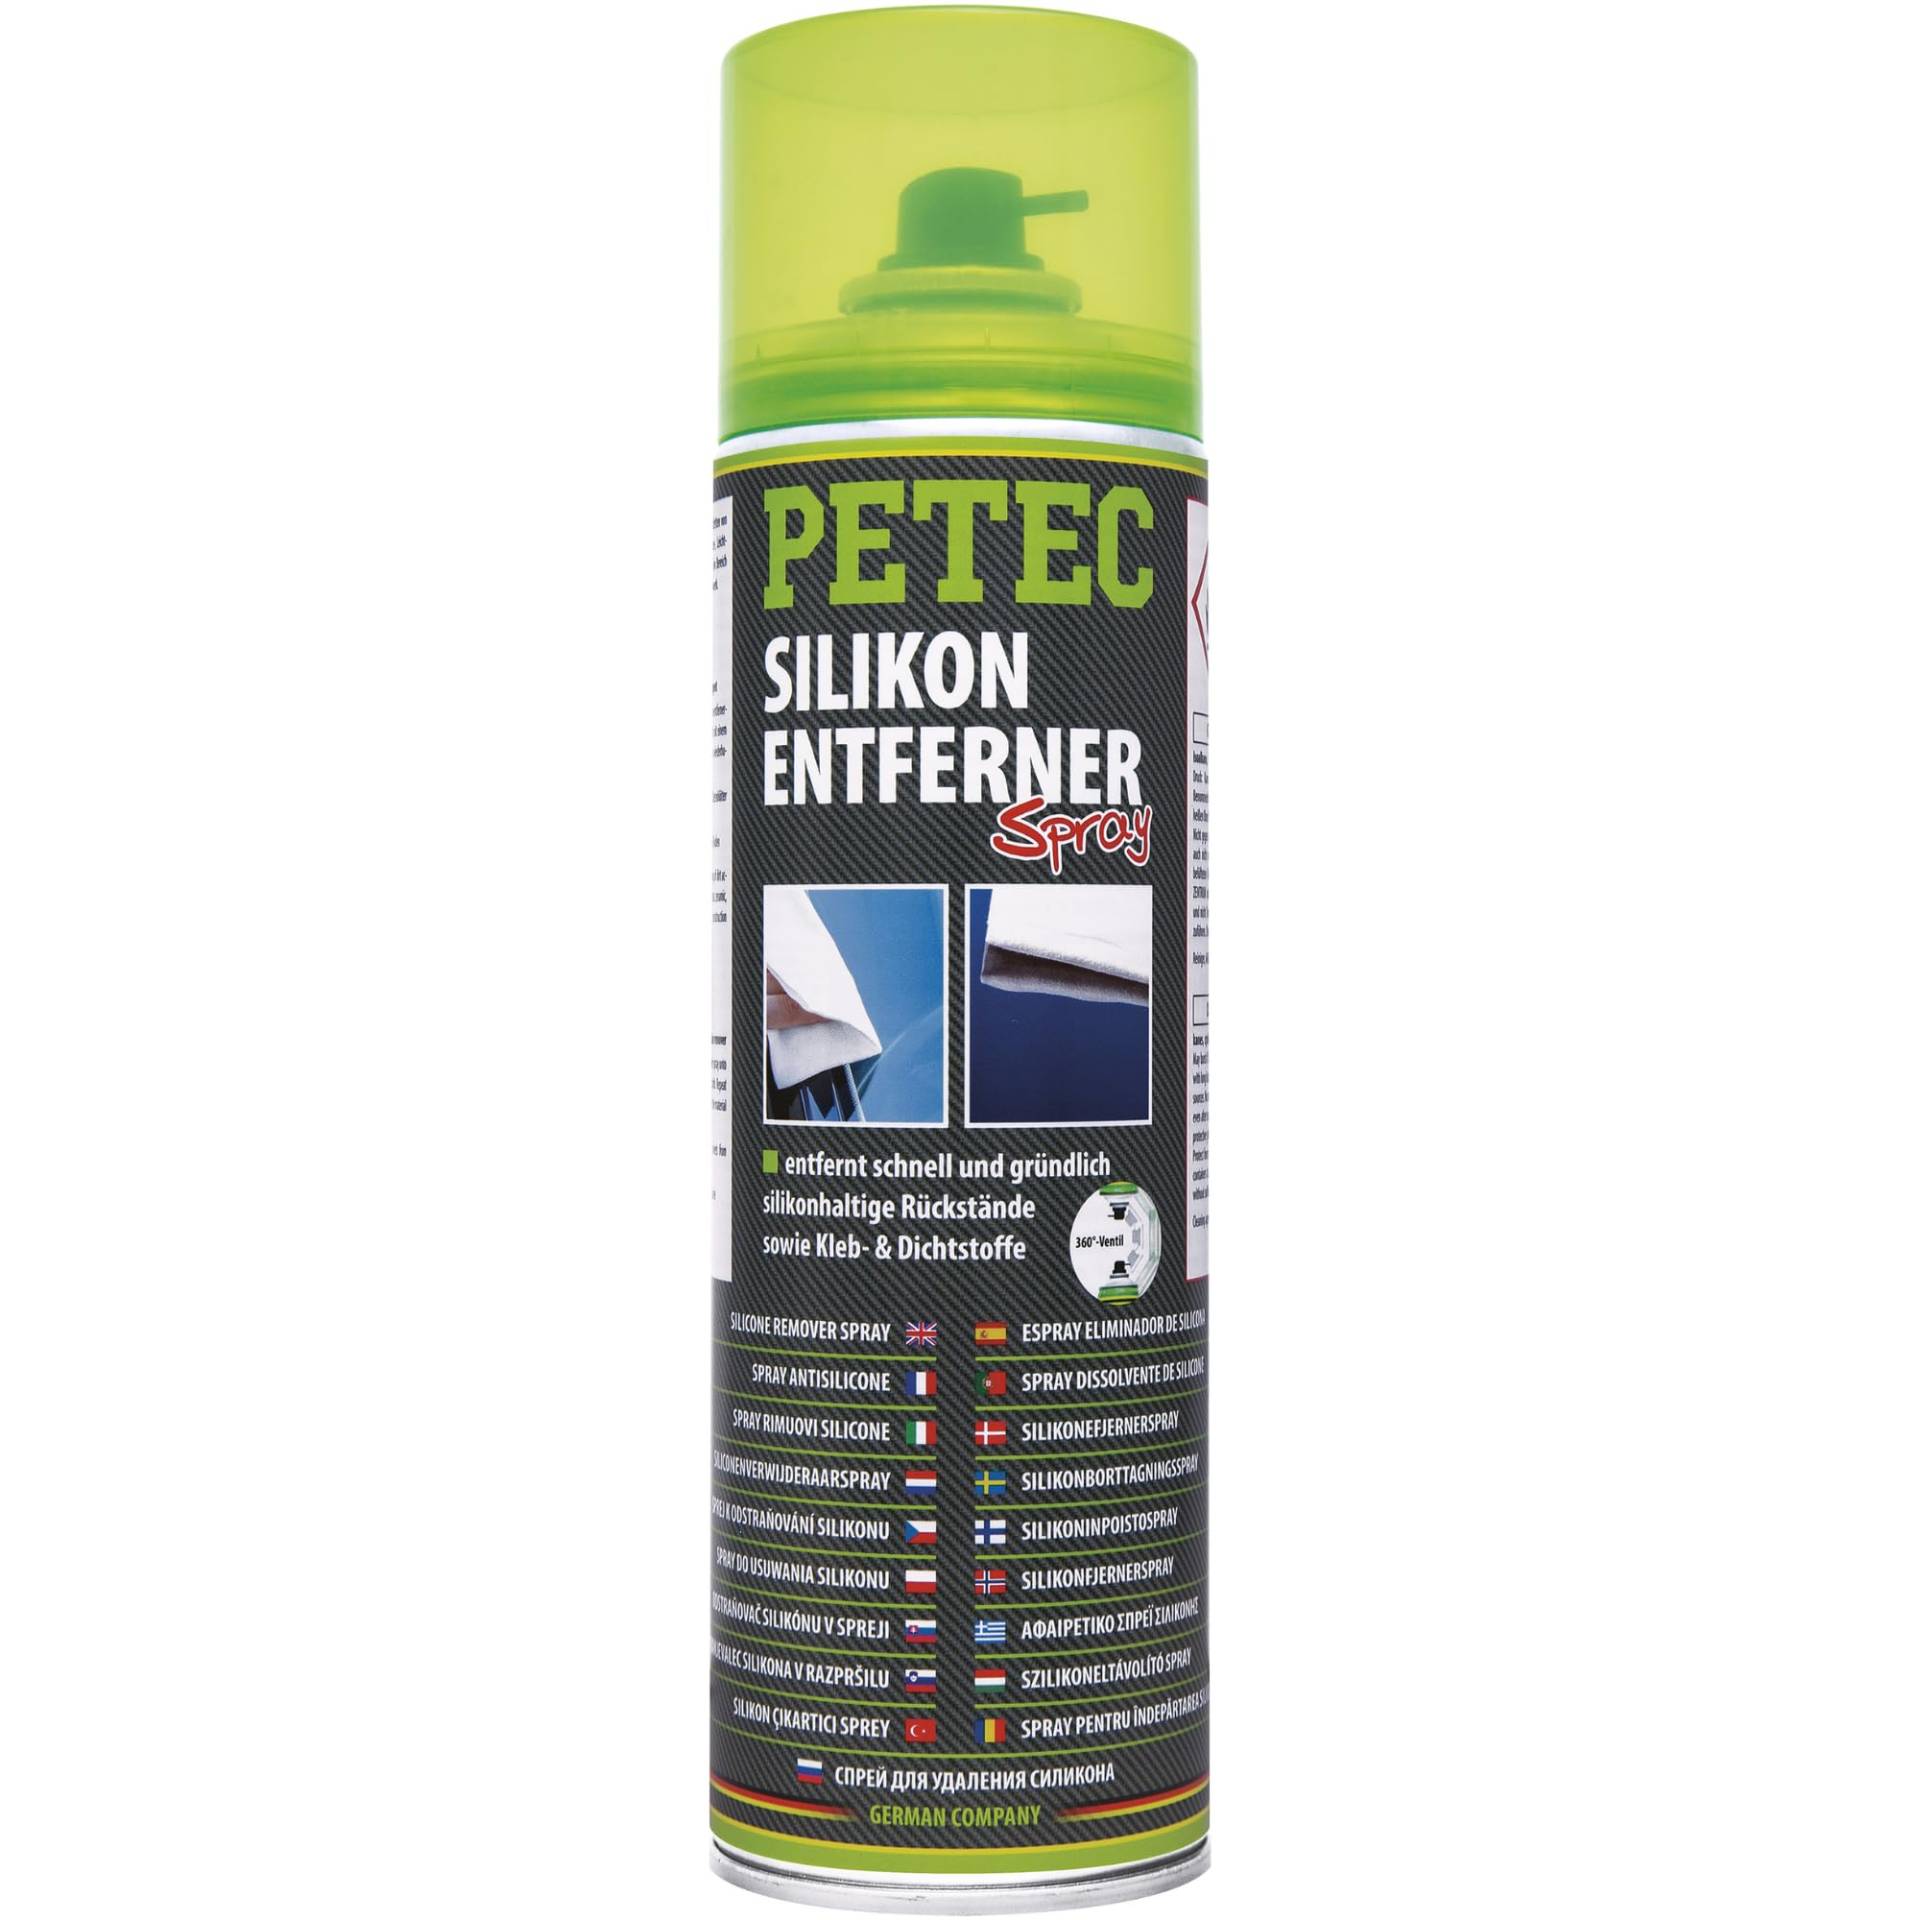 PETEC Silikonentferner Spray, 500 ml 70950 von PETEC